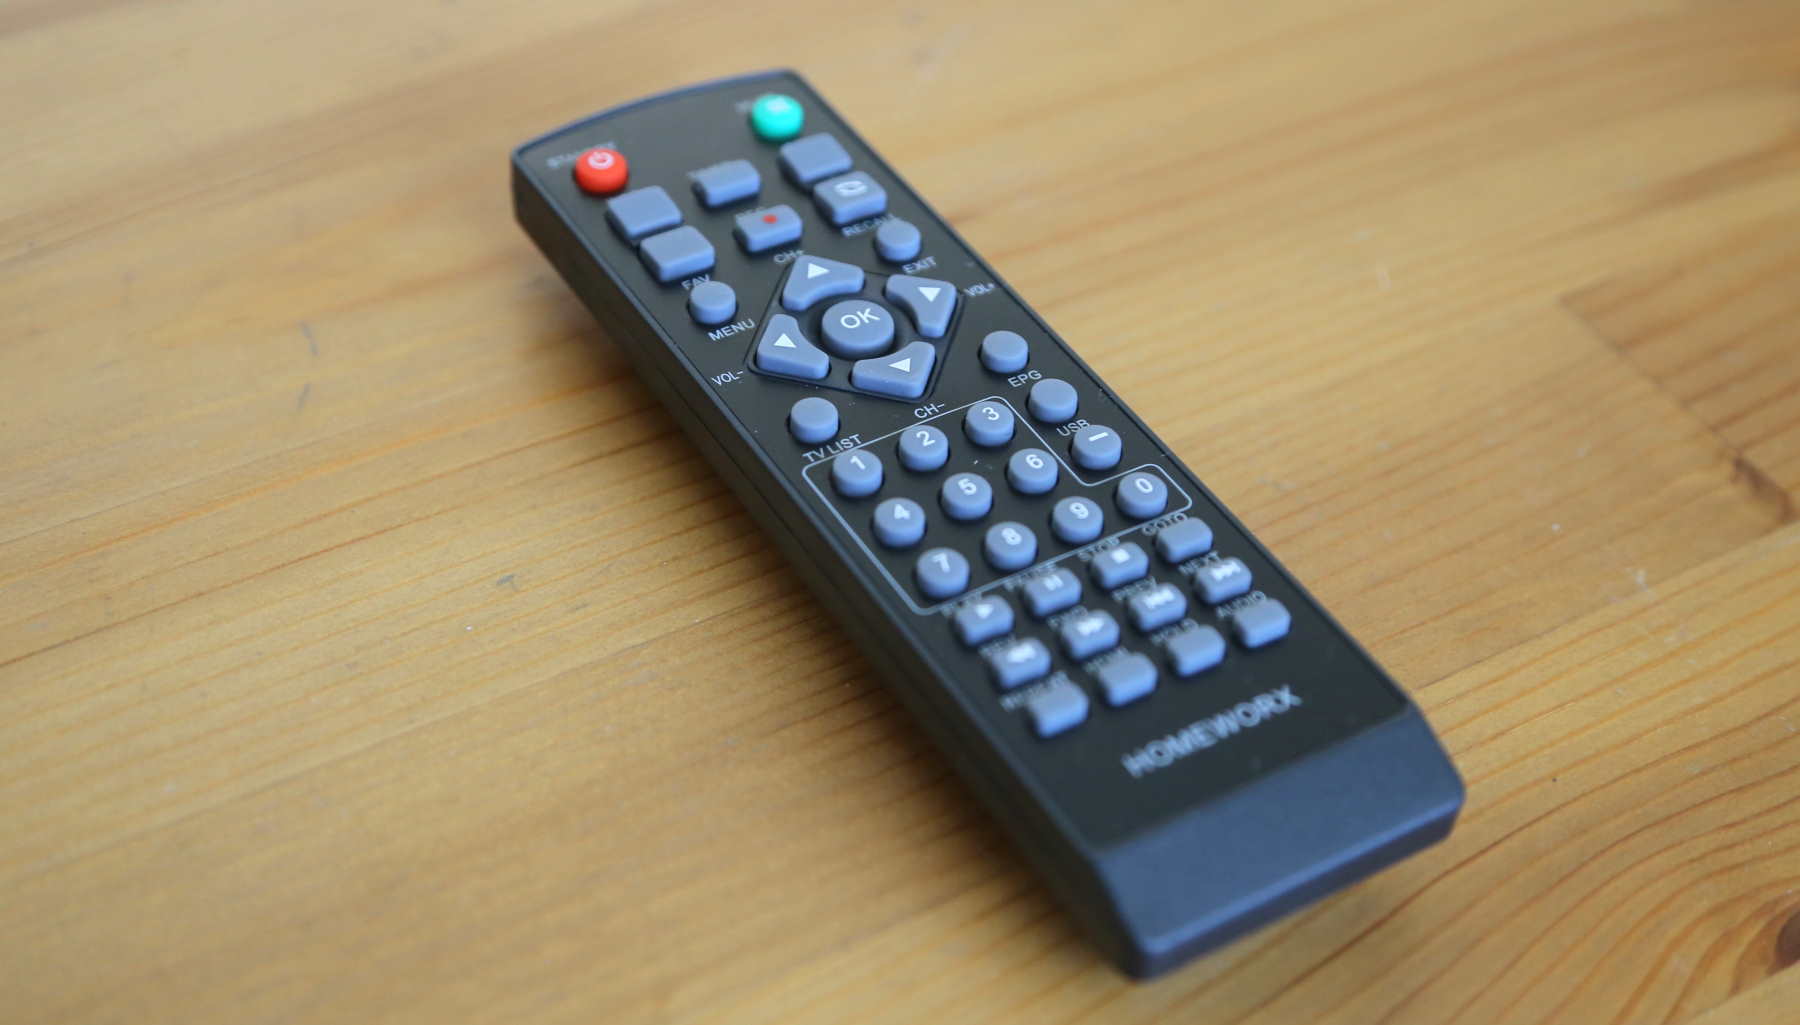 The remote control for the Mediasonic HOMEWORX HW130STB